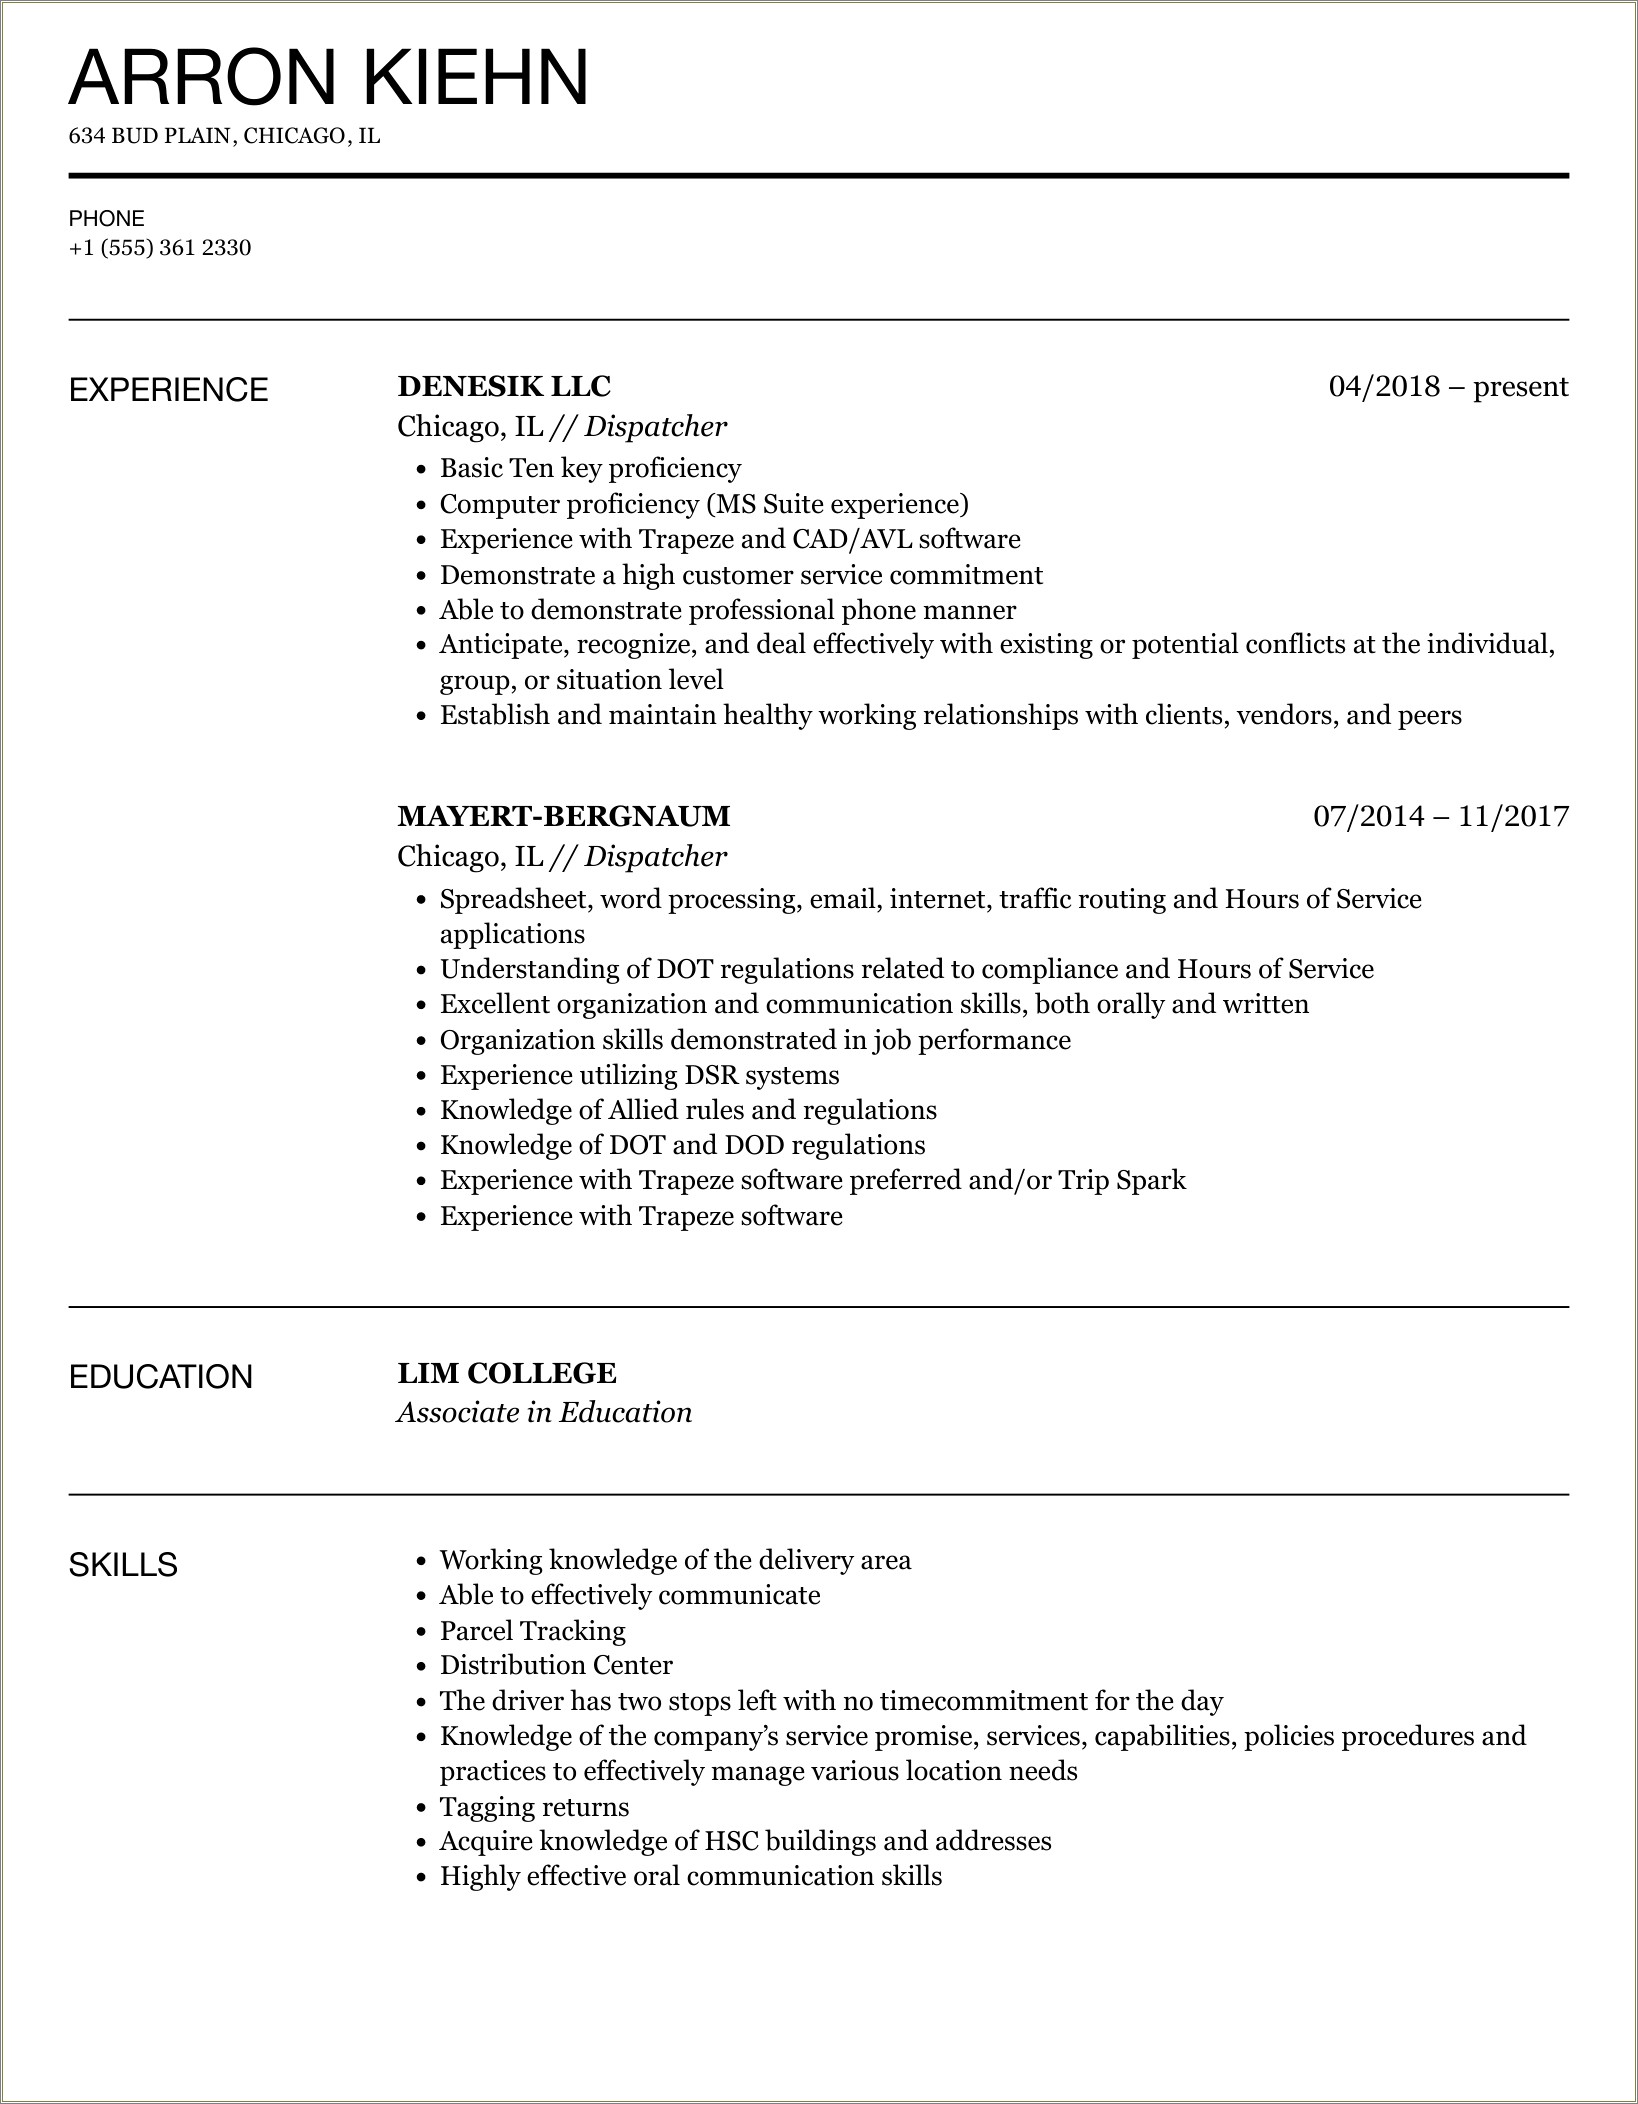 Mail Carrier Job Description For Resume